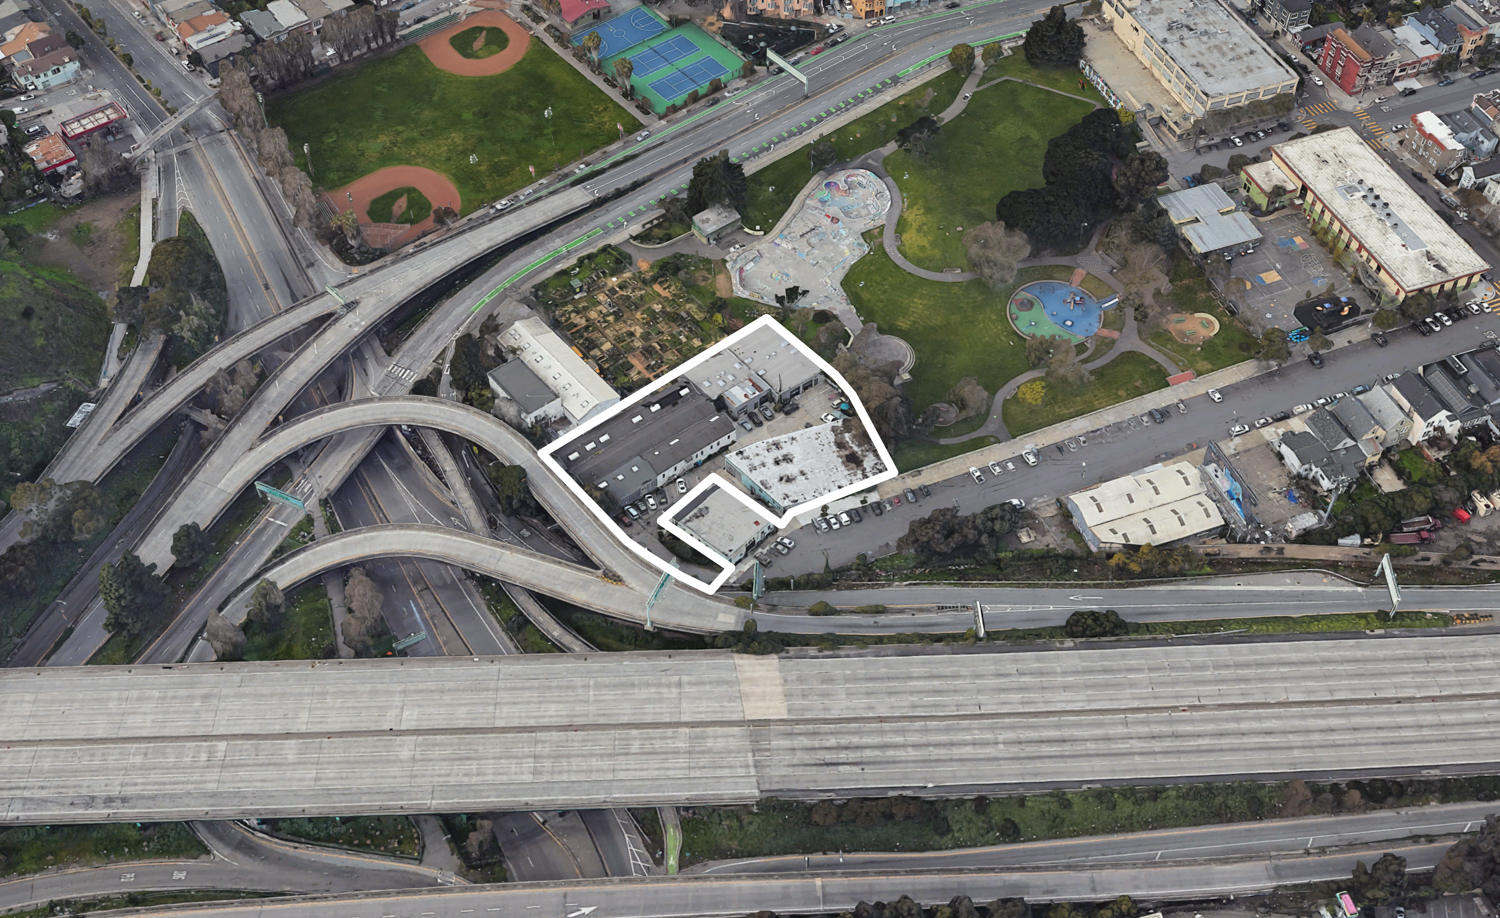 1458 San Bruno Avenue, image via Google Satellite